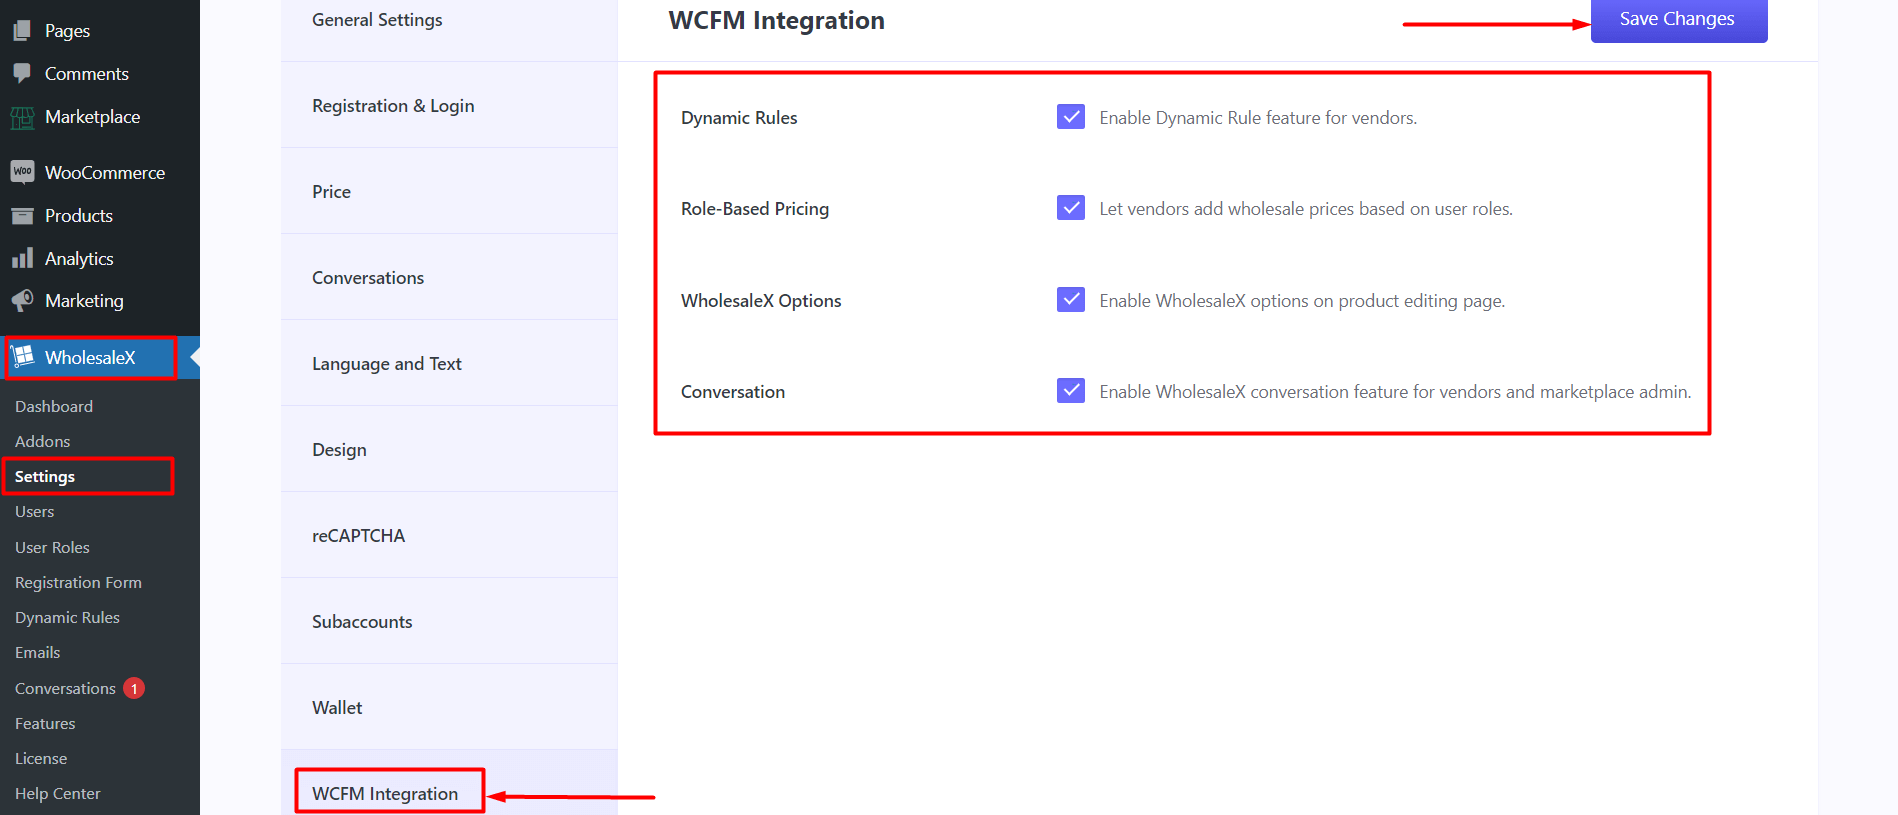 WCFM Marketplace Integration Settings